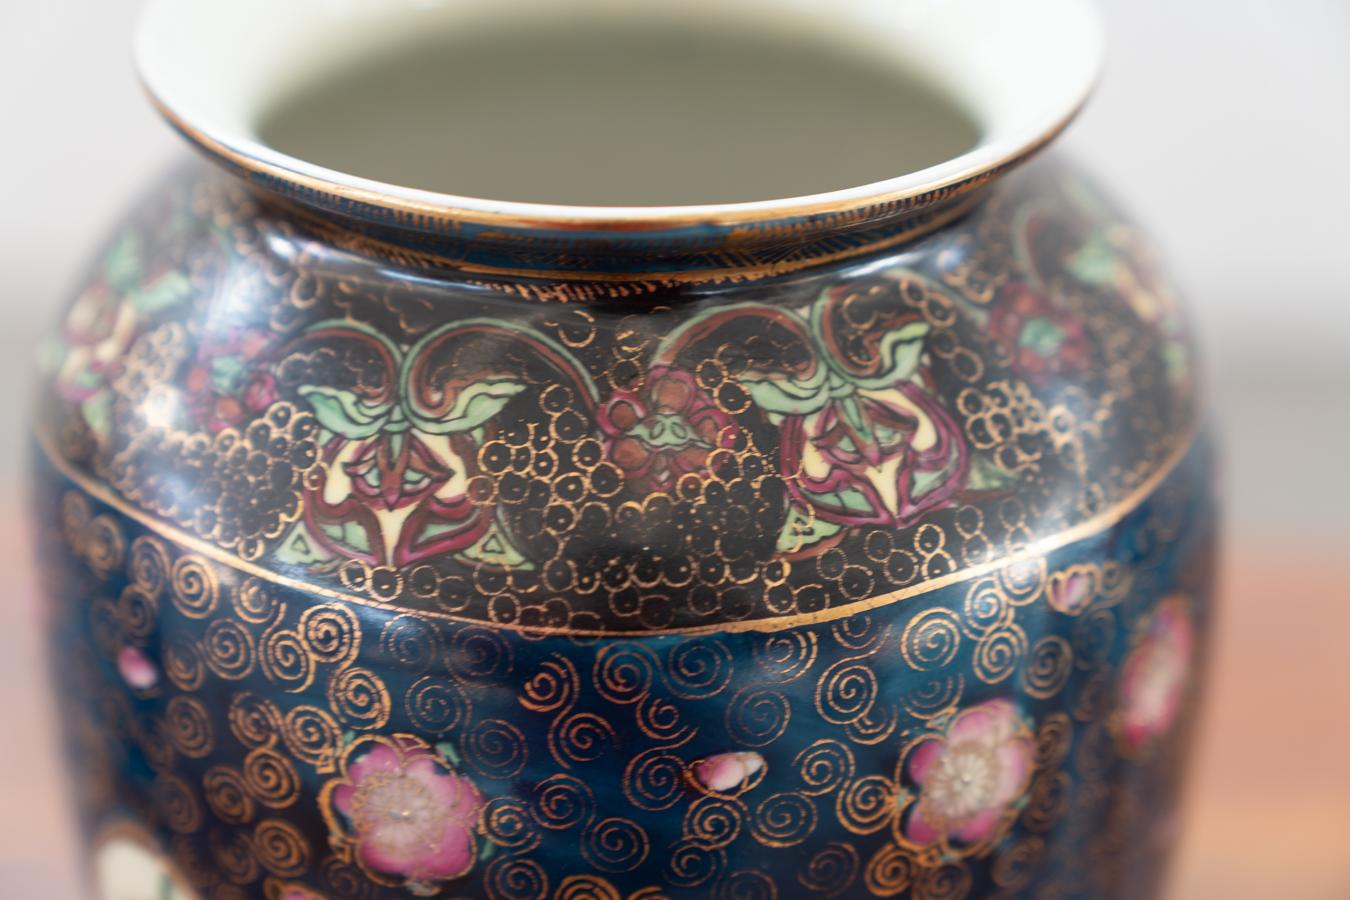 Japanese antique porcelain porcelain vases Meiji period 19th century For Sale 10